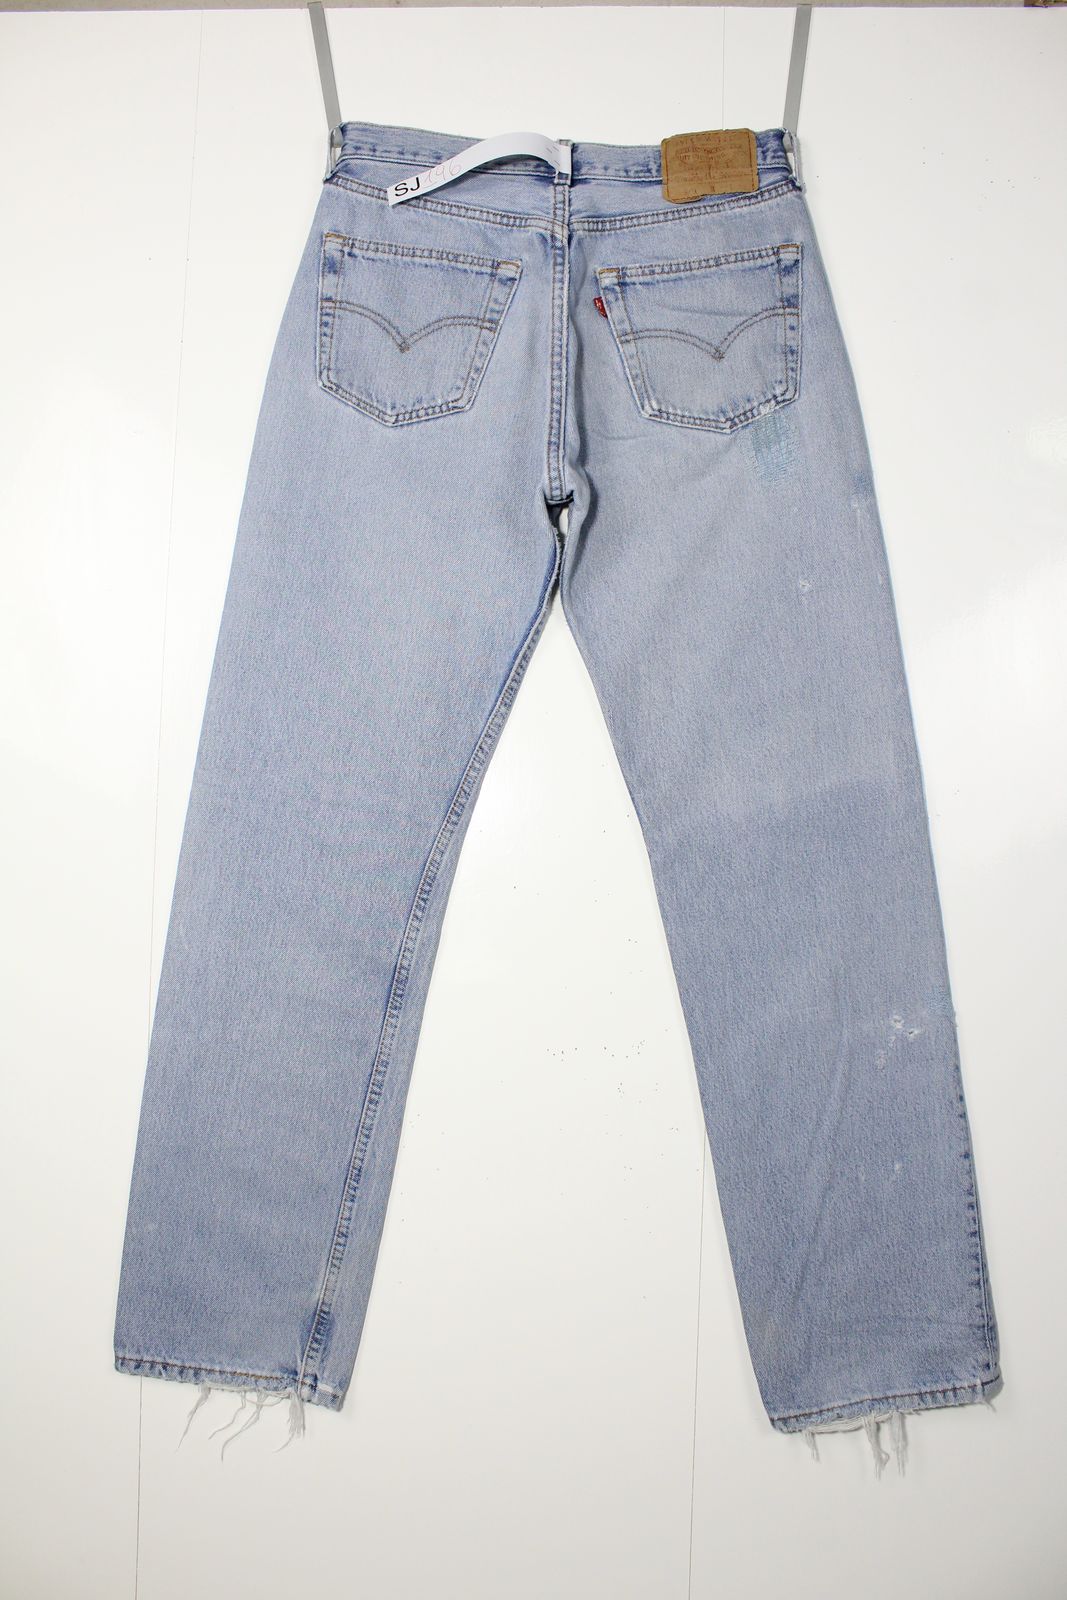 Levi's 501 Denim W32 L32 Made In USA Jeans Vintage